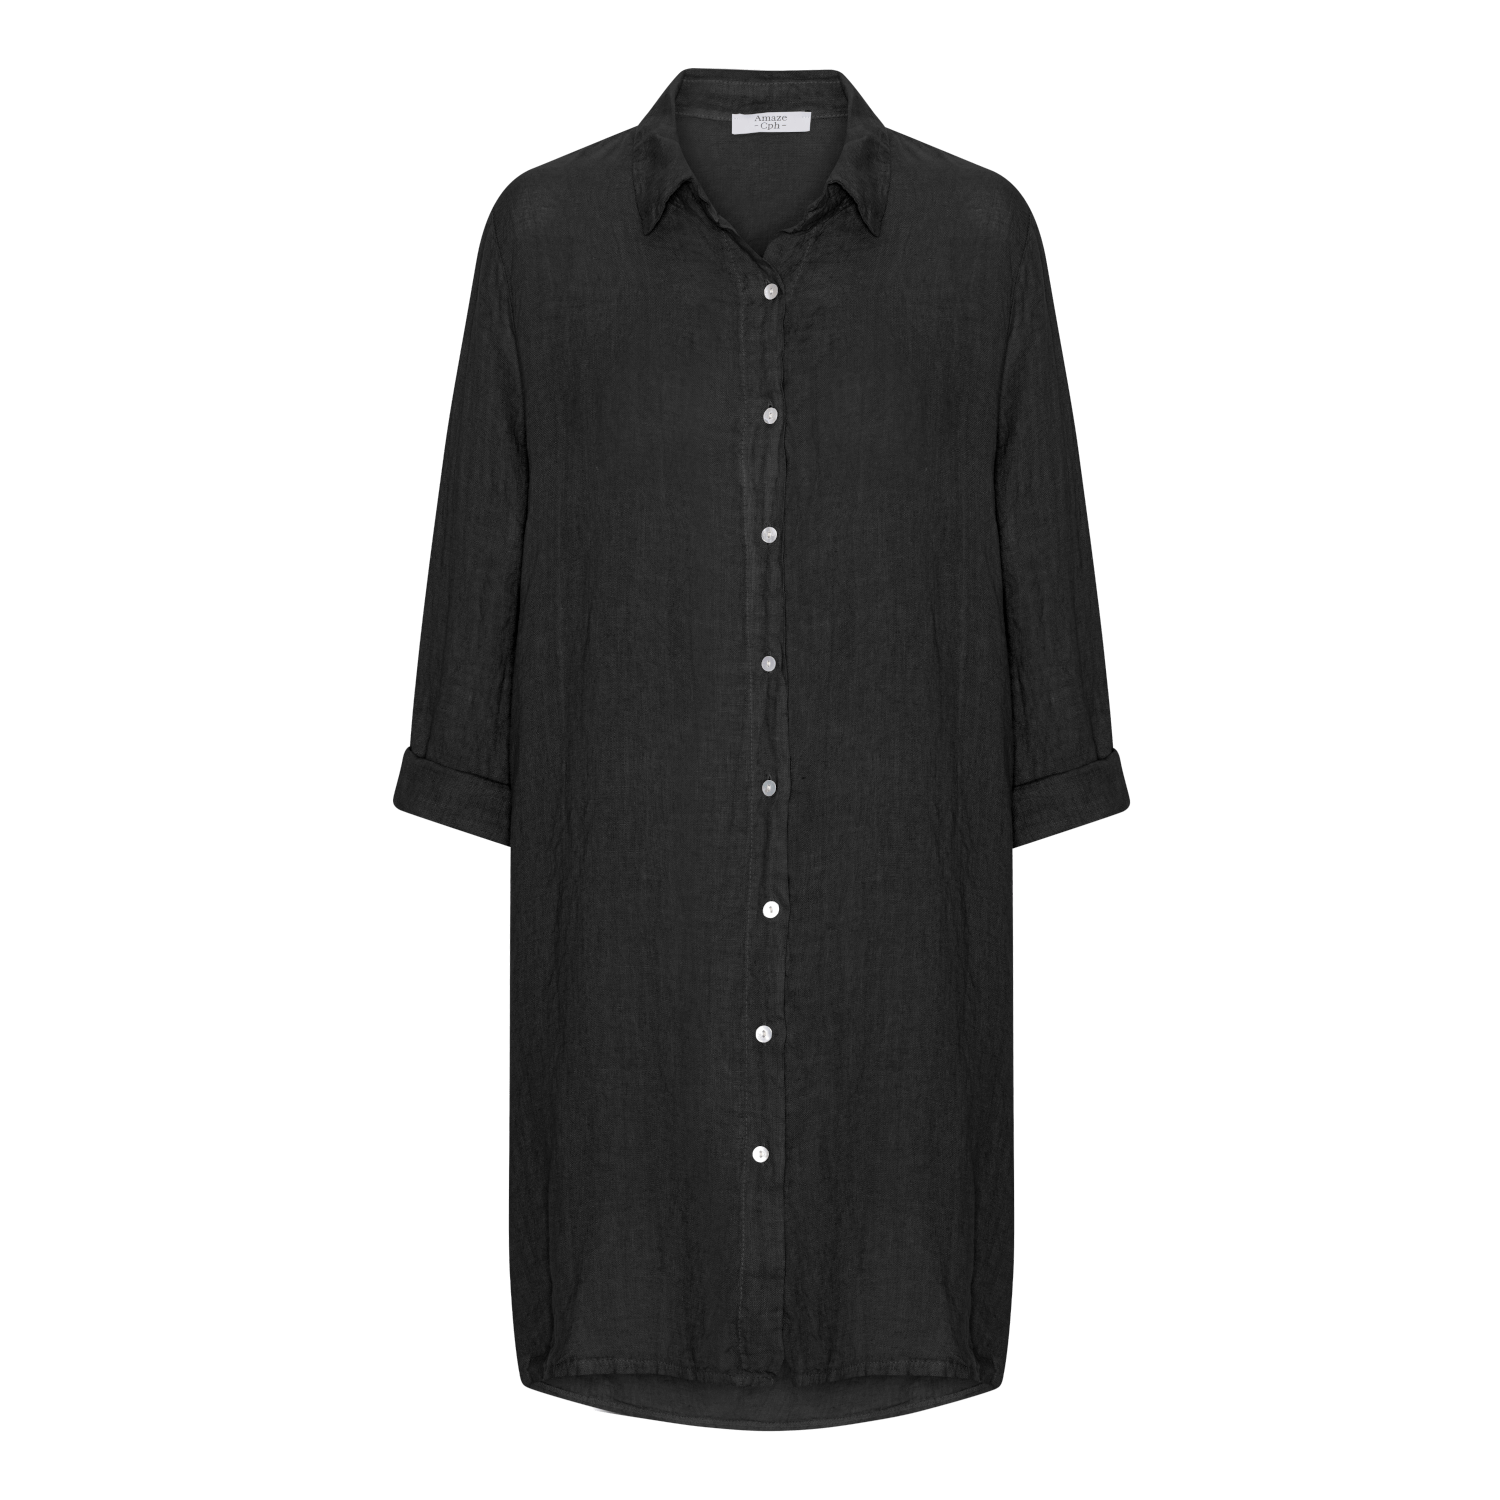 Long Linen Shirt - Black - Amaze Cph - Black - S/M